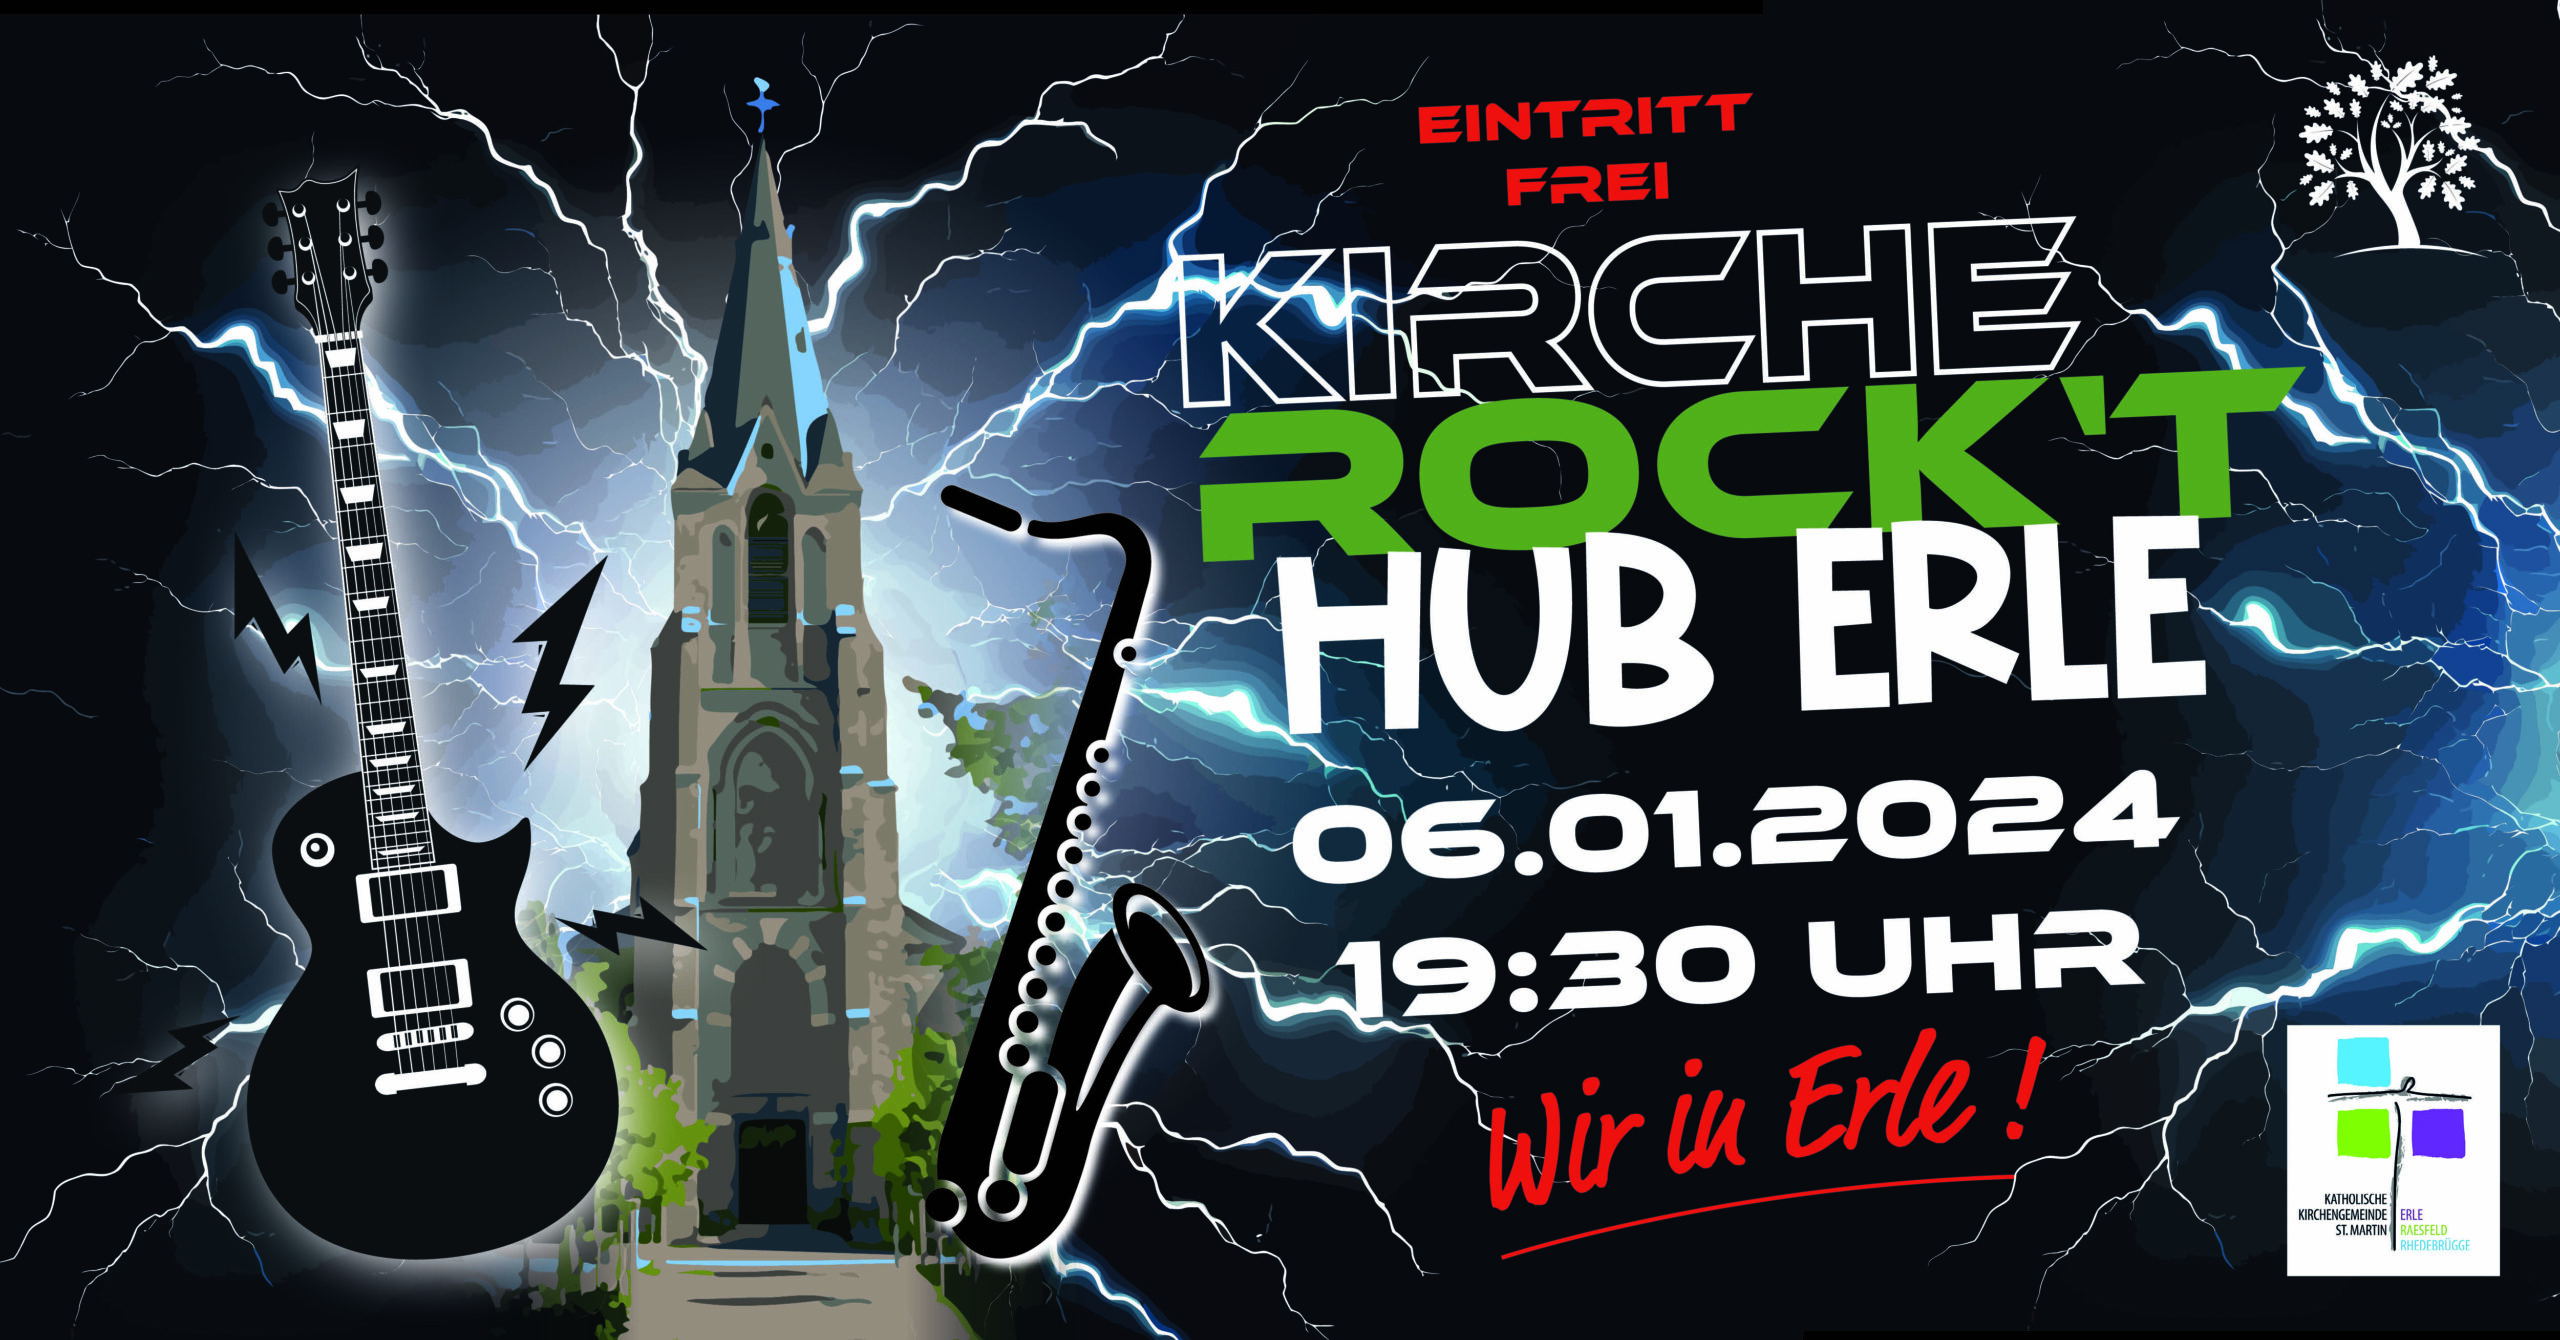 Veranstaltung in Erle: Kirche rockt Hub Erle